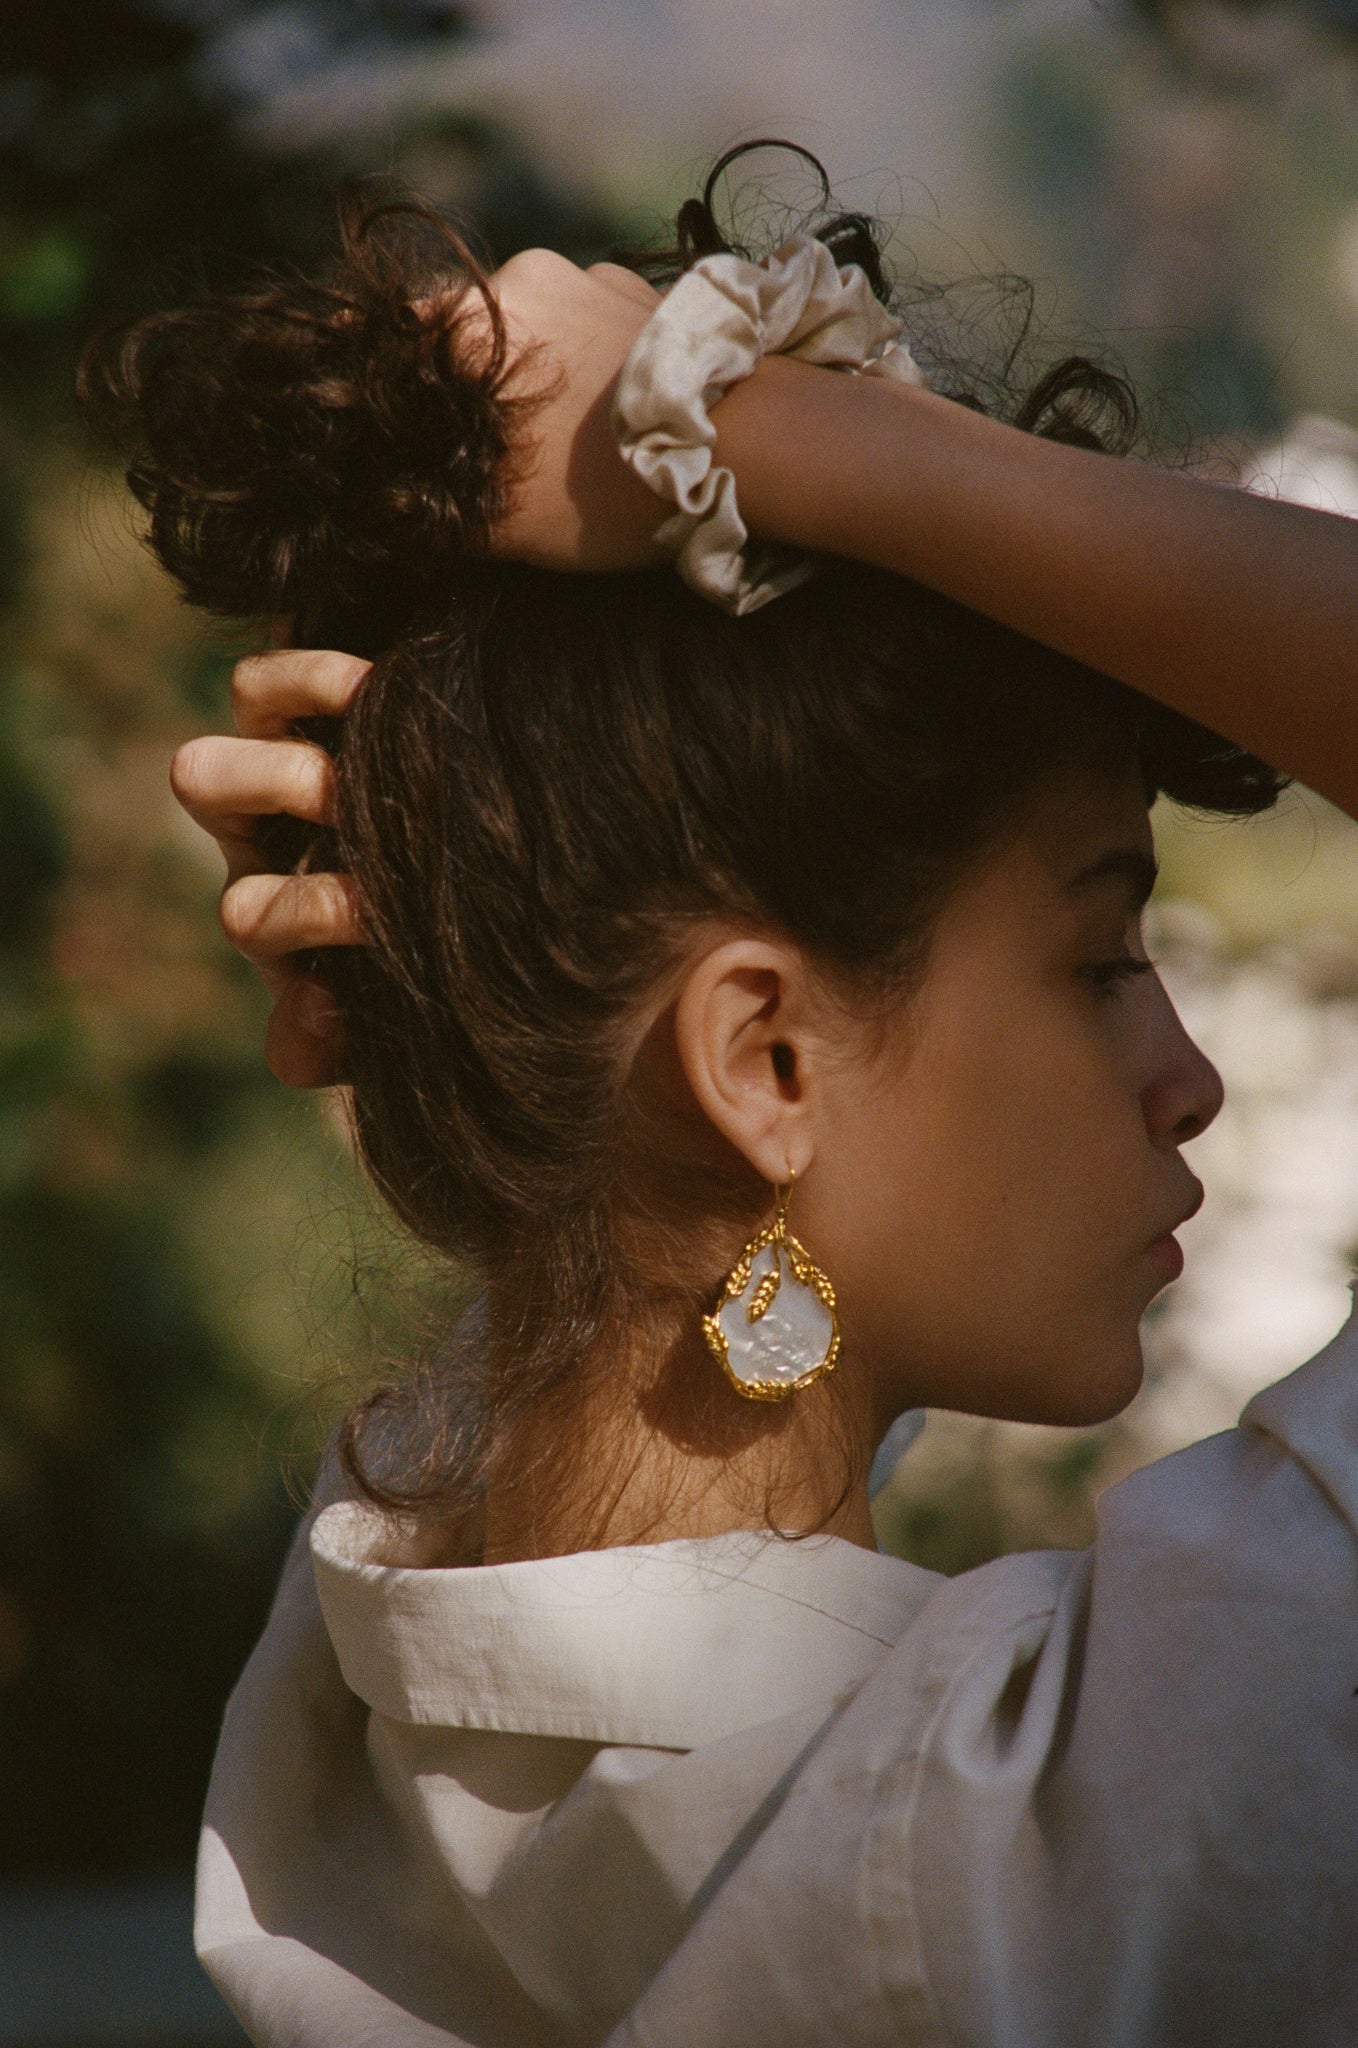 Françoise mother-of-pearl earrings